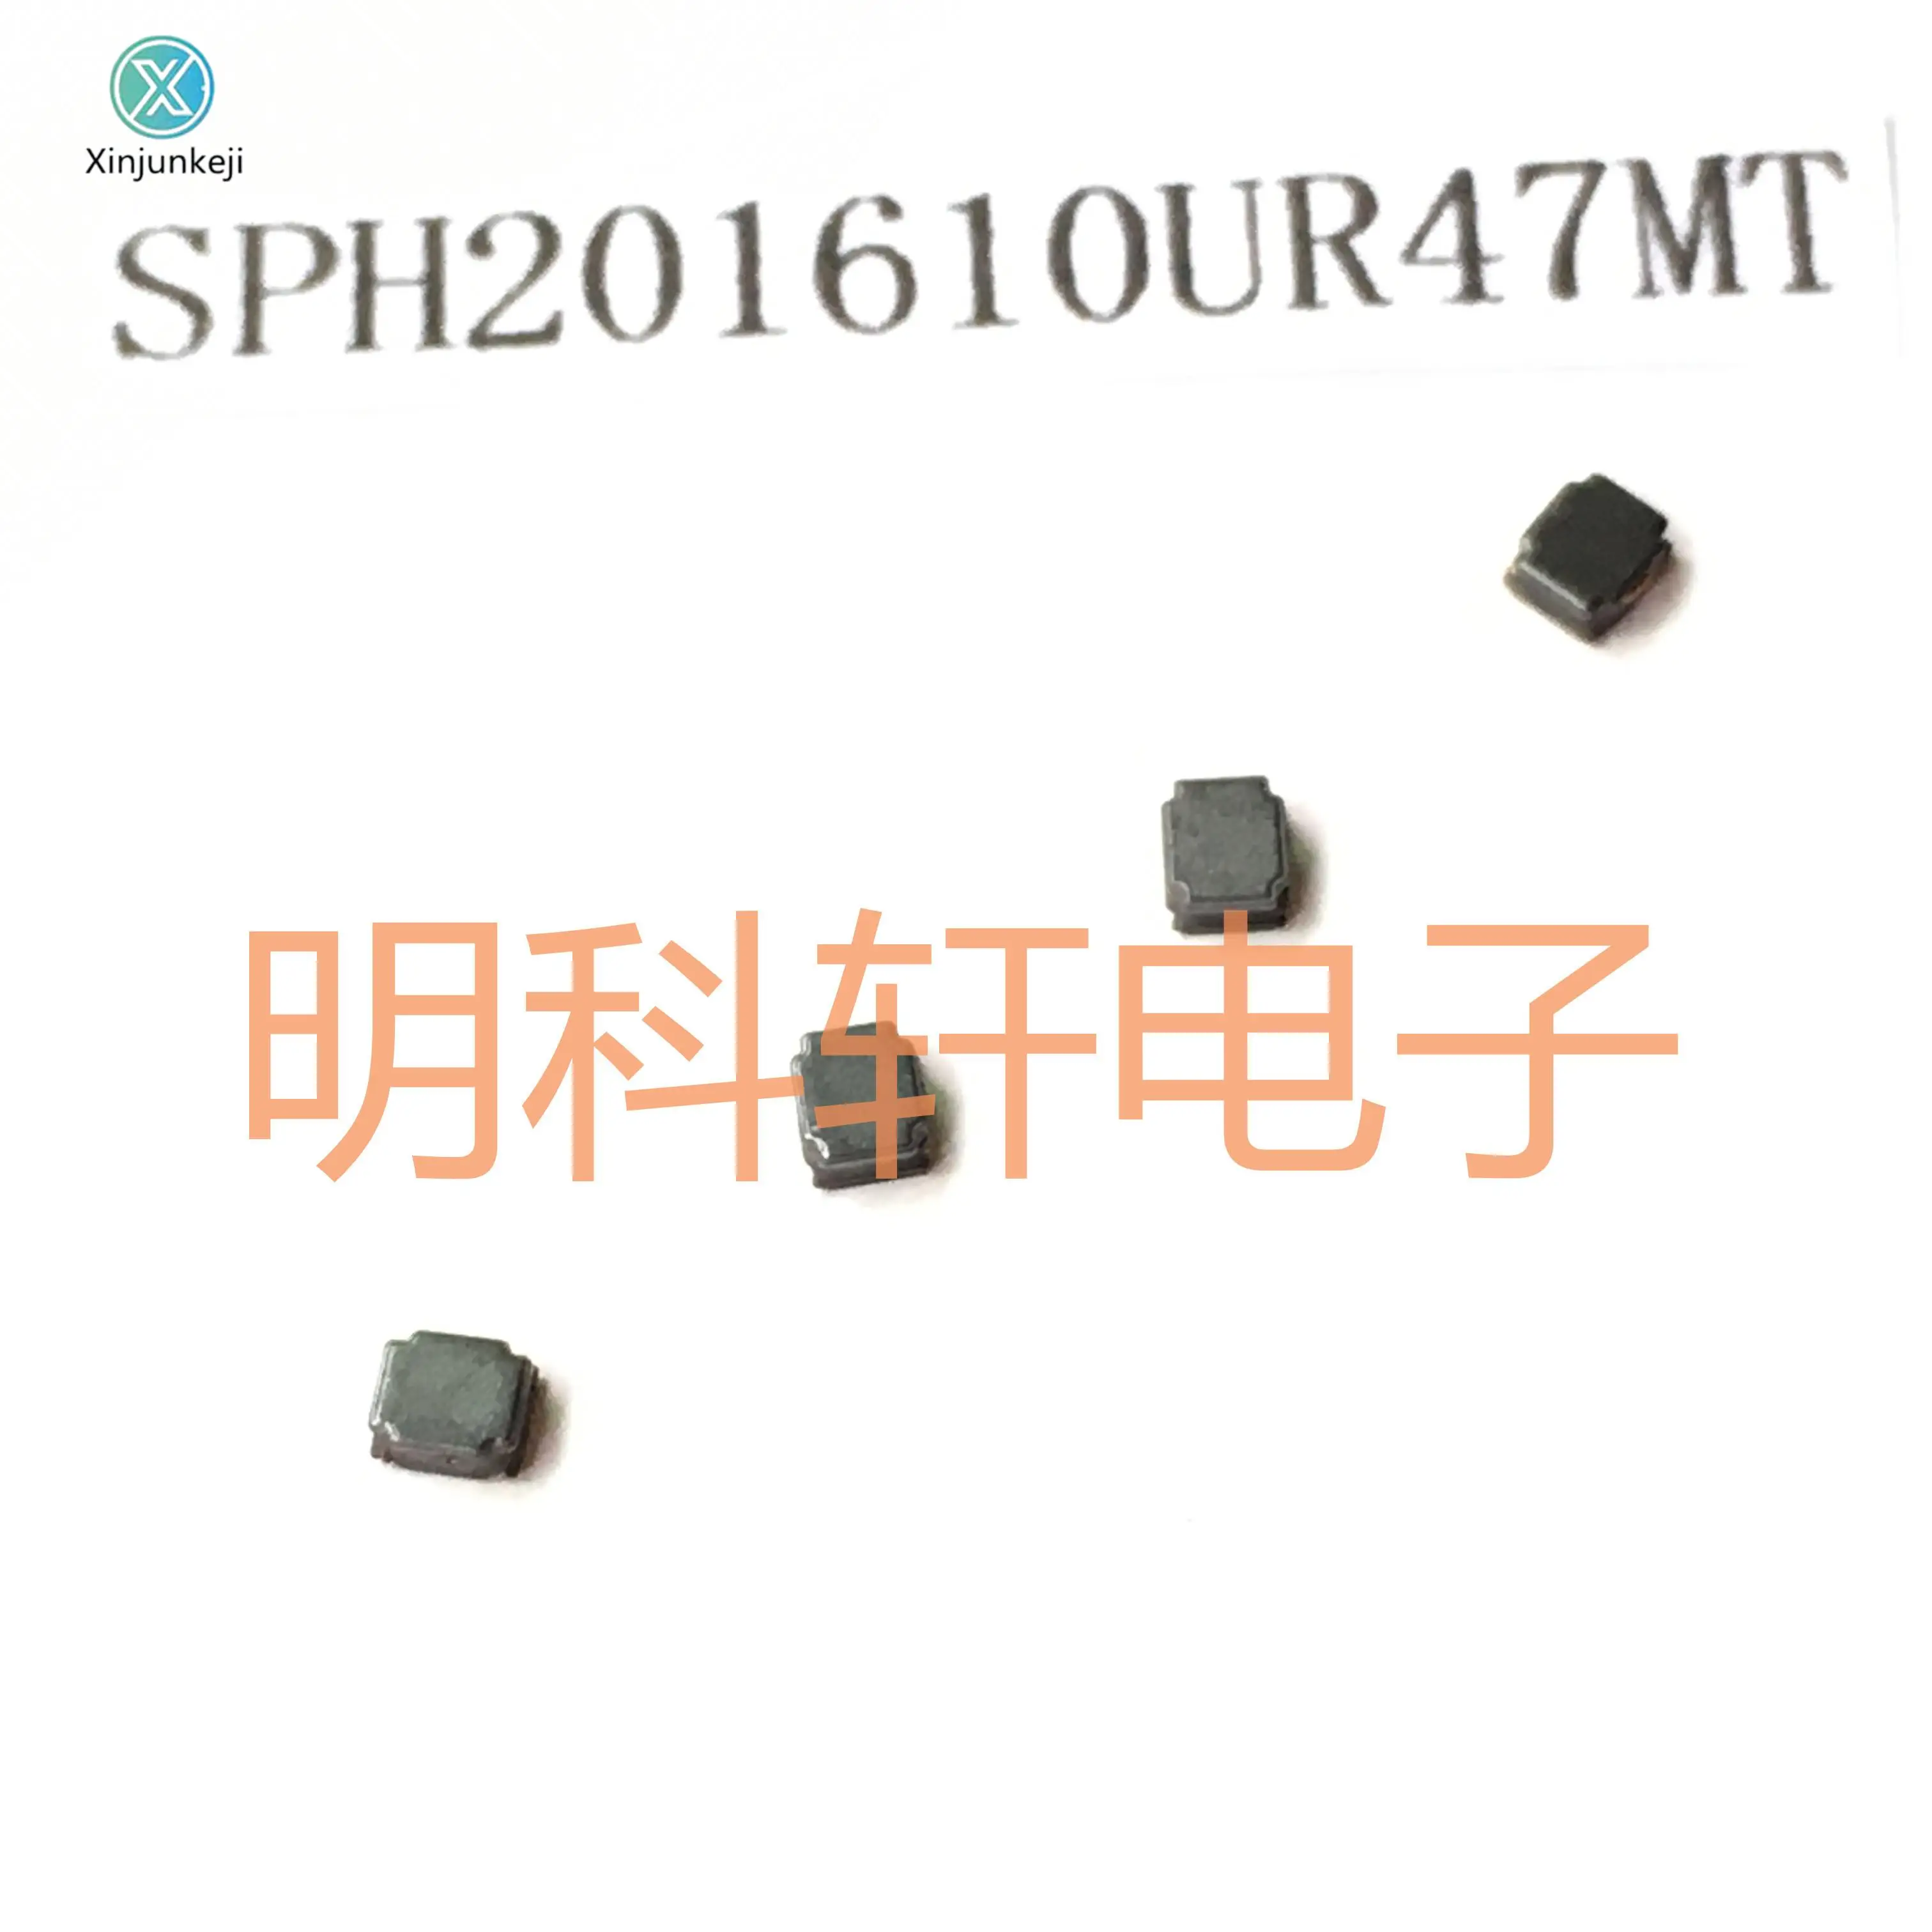 30pcs orginal new SPH201610UR47MT SMD power inductor 0.47UH 2.0*1.6*1.0